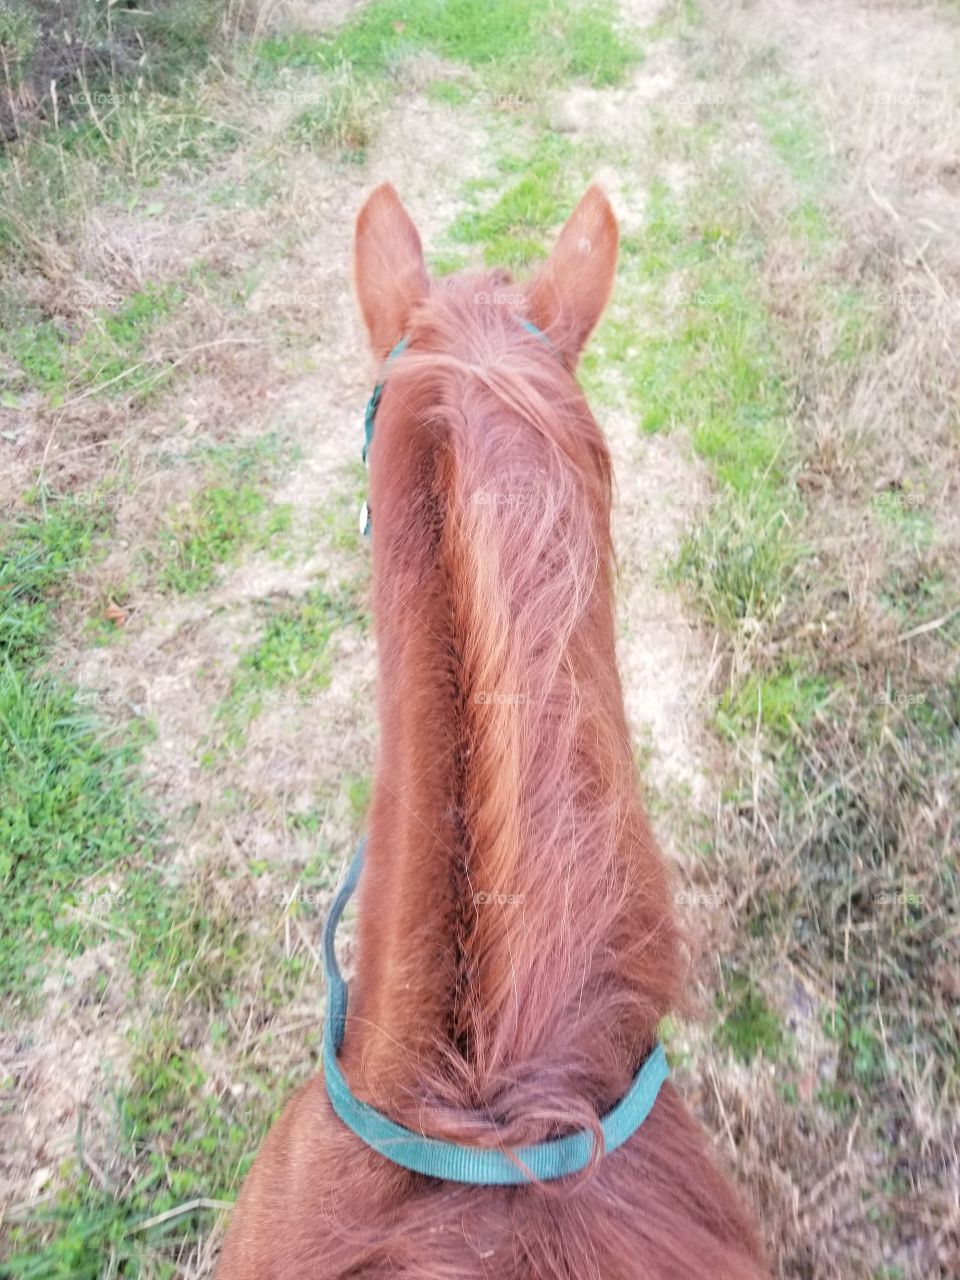 Riding chestnut horse.